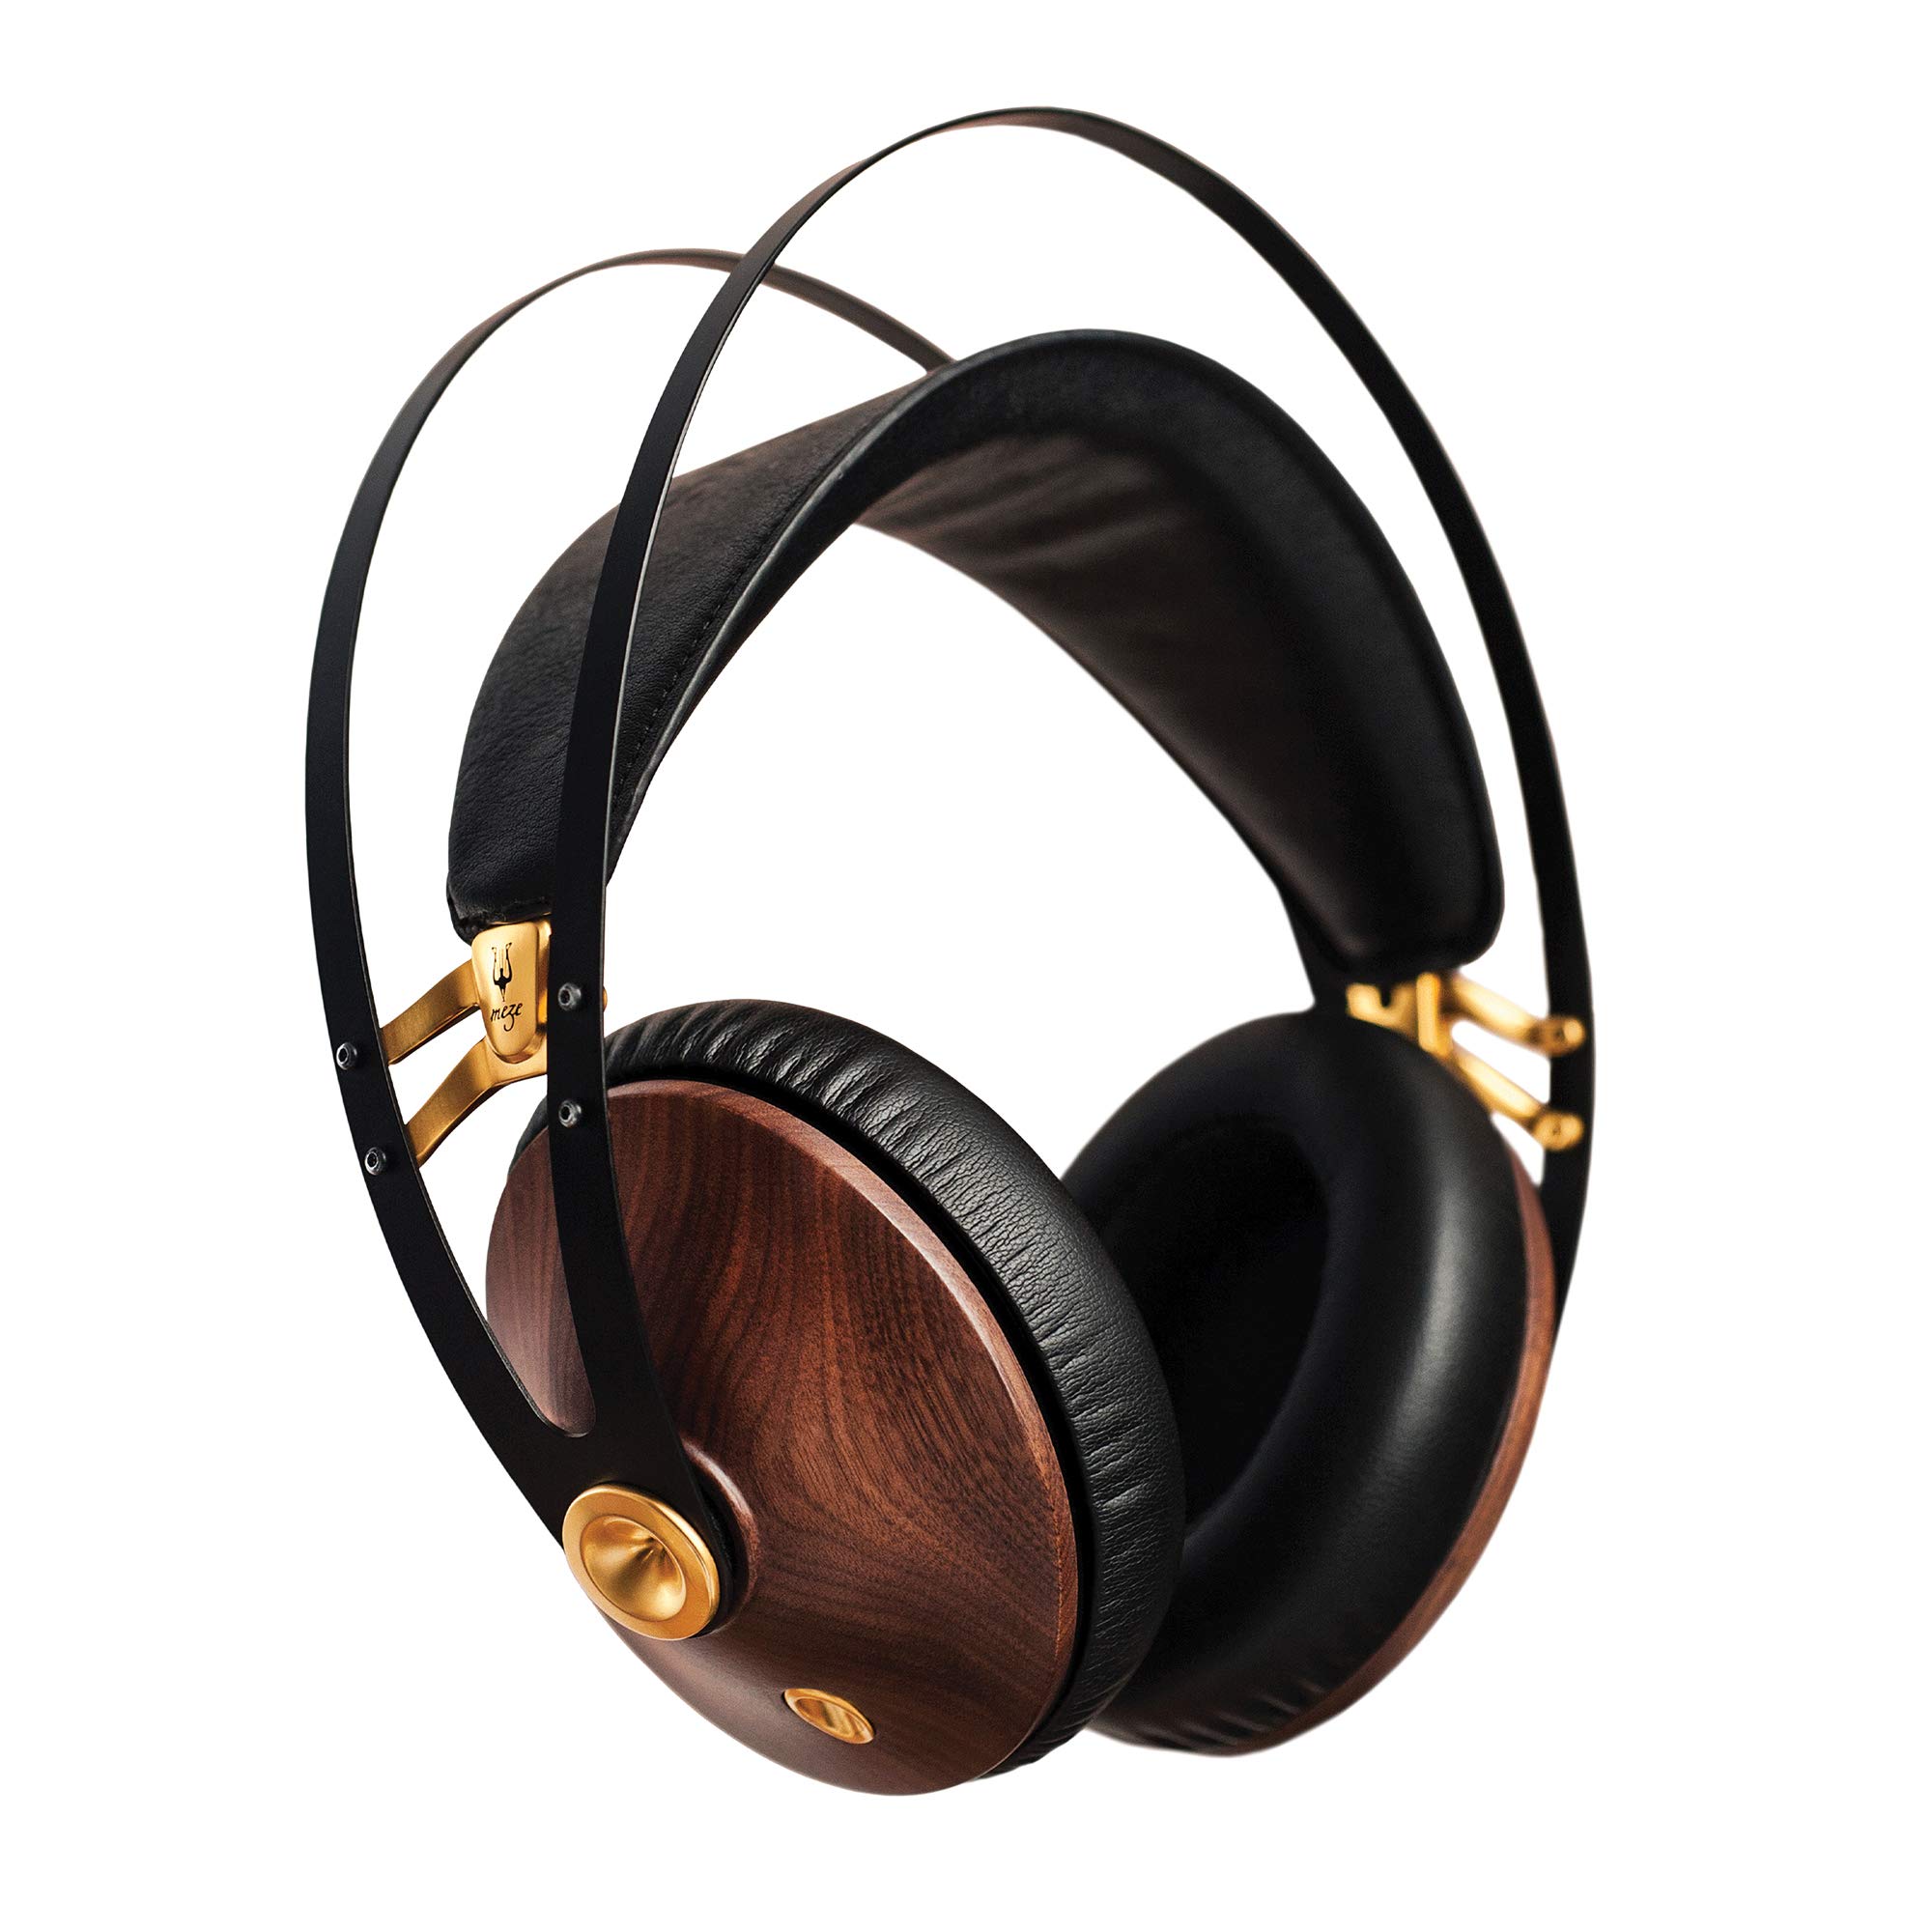 Meze Headphones Meze 99 クラシック ウォルナット ゴールド |マイクと自動調整可能なヘ...